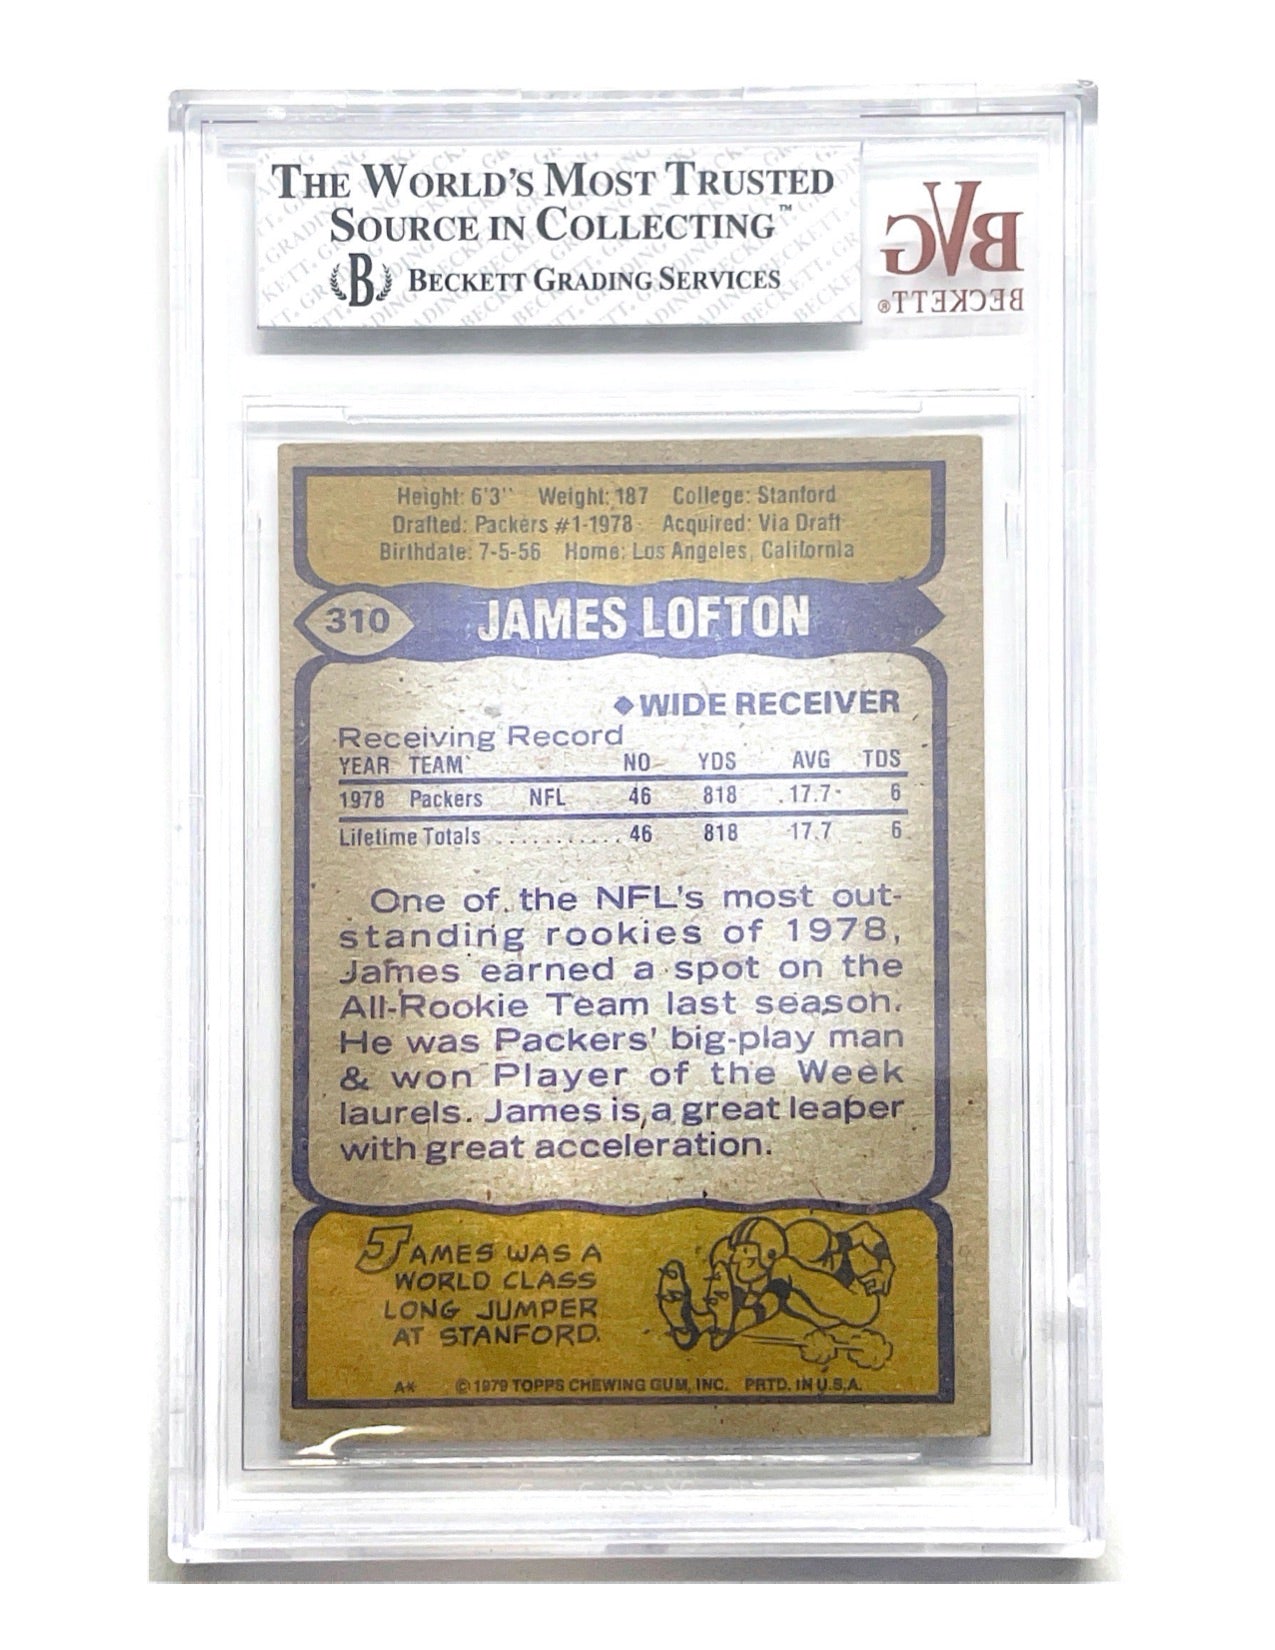 James Lofton 1979 Topps Rookie #310 - BGS 5.5